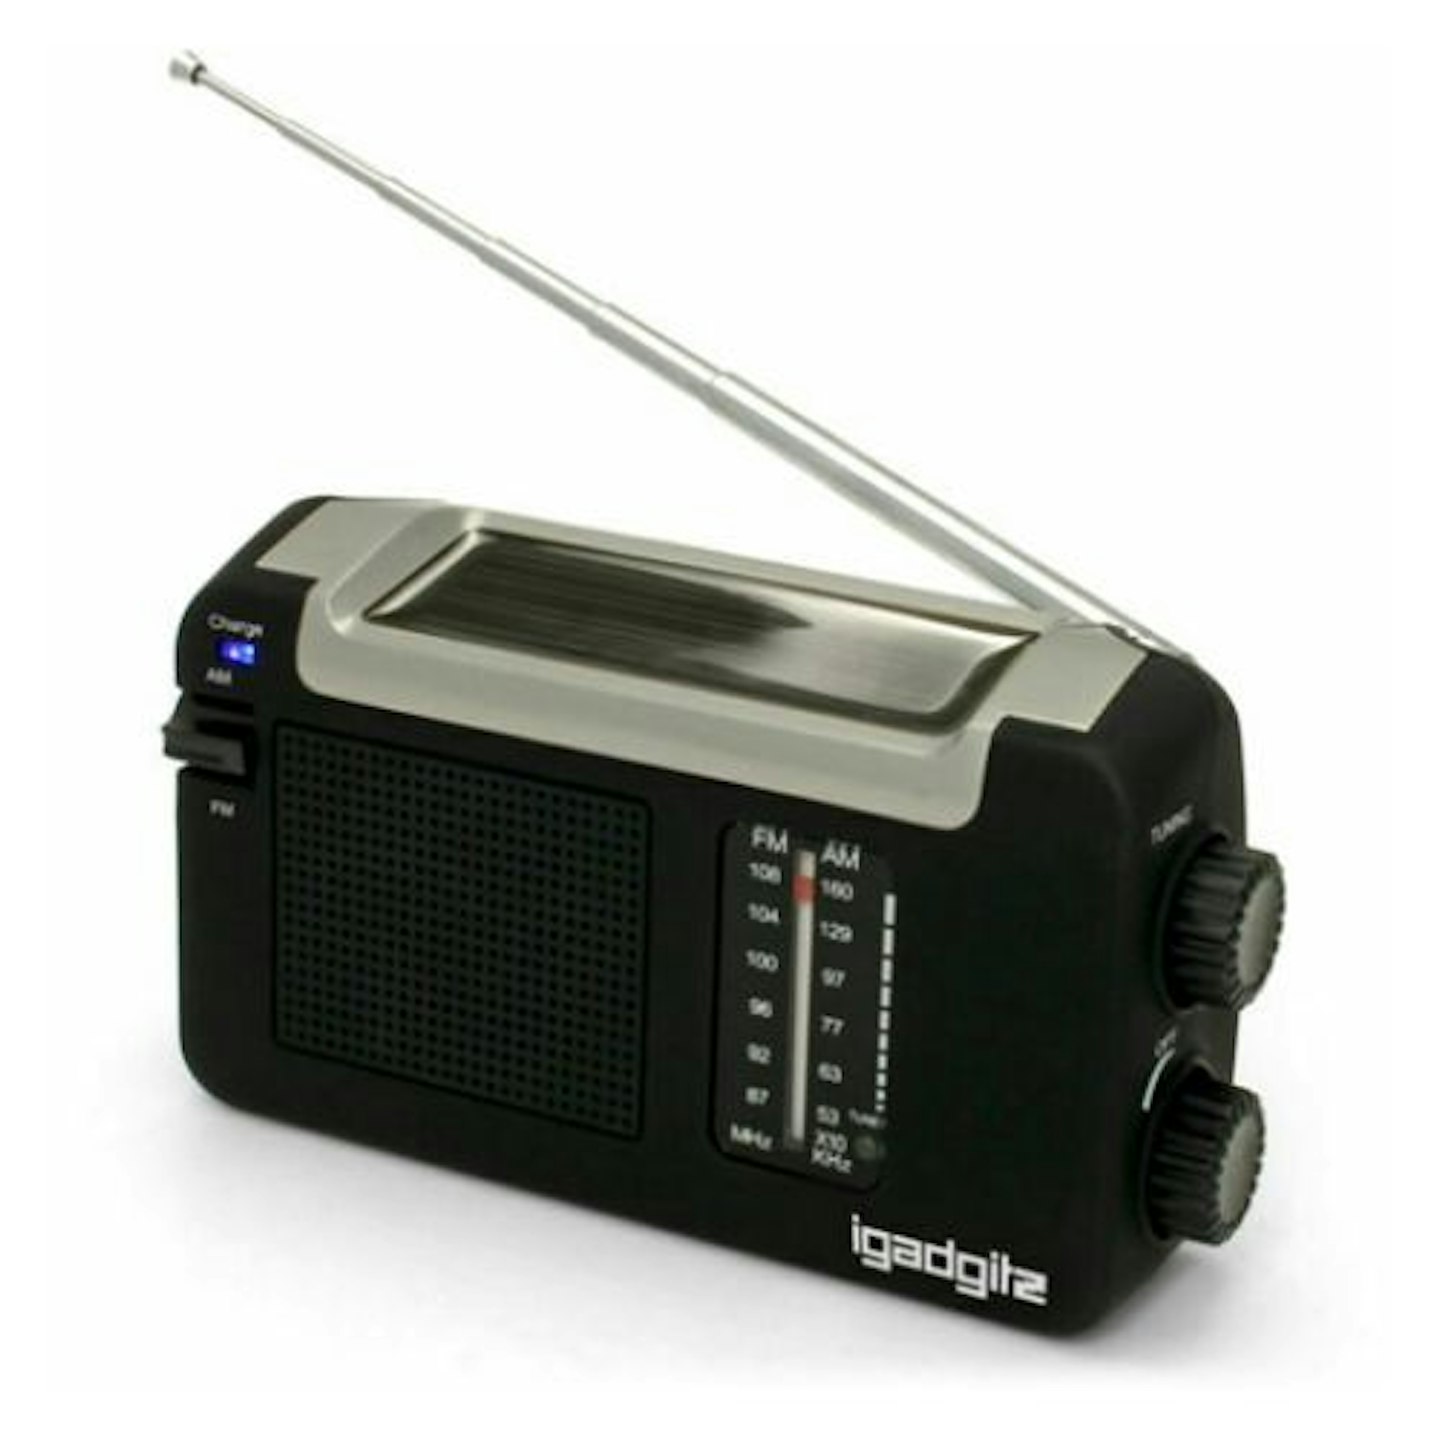 iGadgitz Xtra U4457 Wind Up, Solar & USB Rechargeable Portable AM/FM Radio